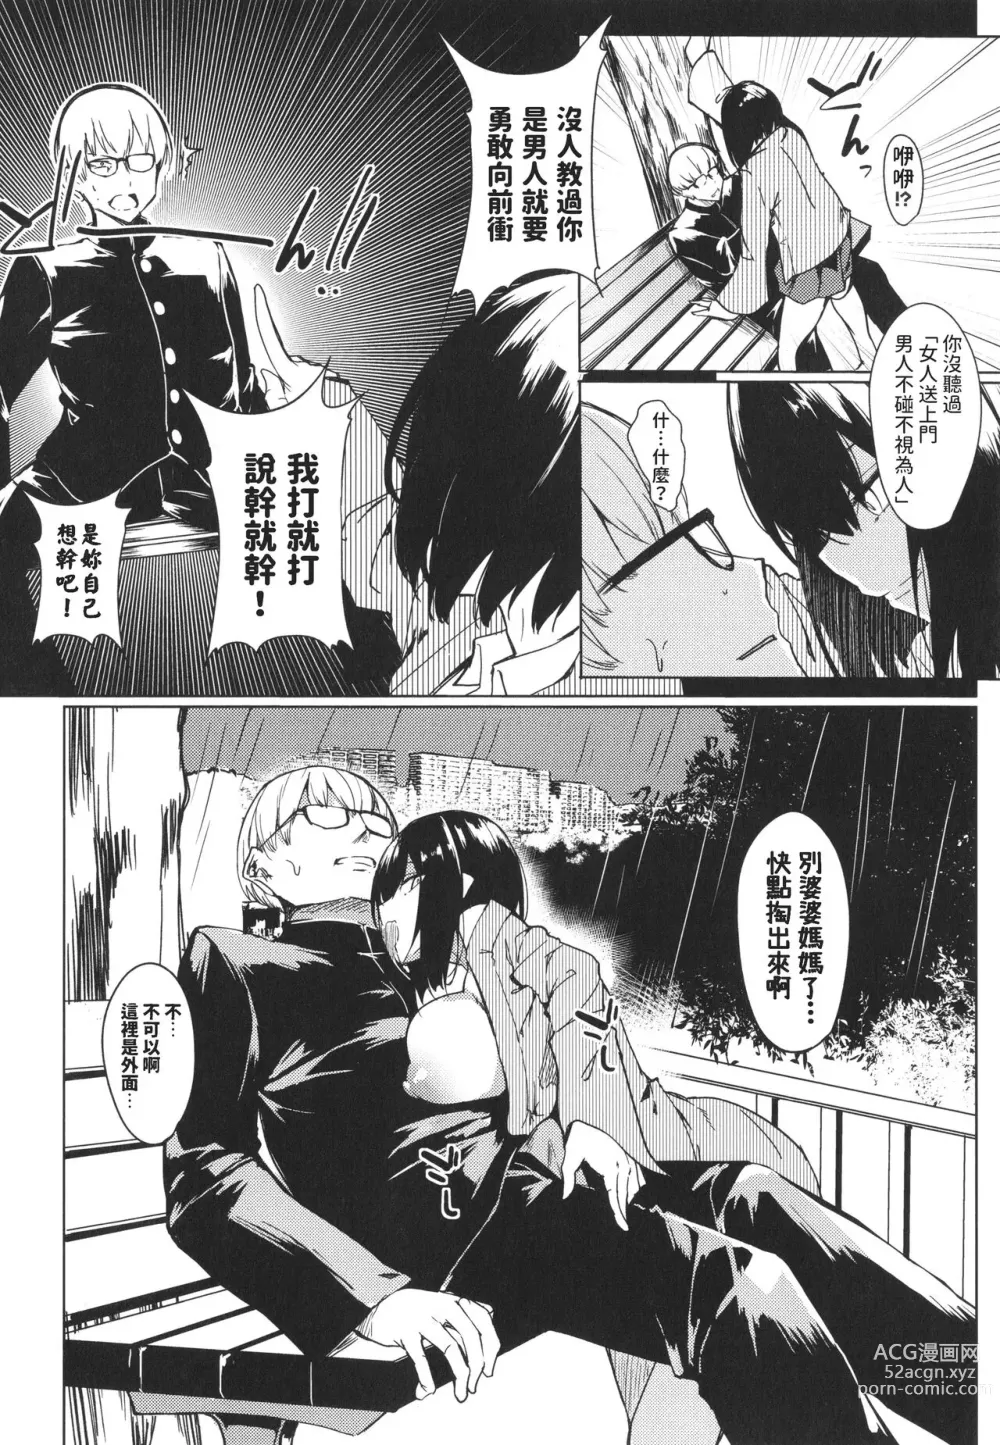 Page 6 of manga Yurei Shoujo no Oneigai